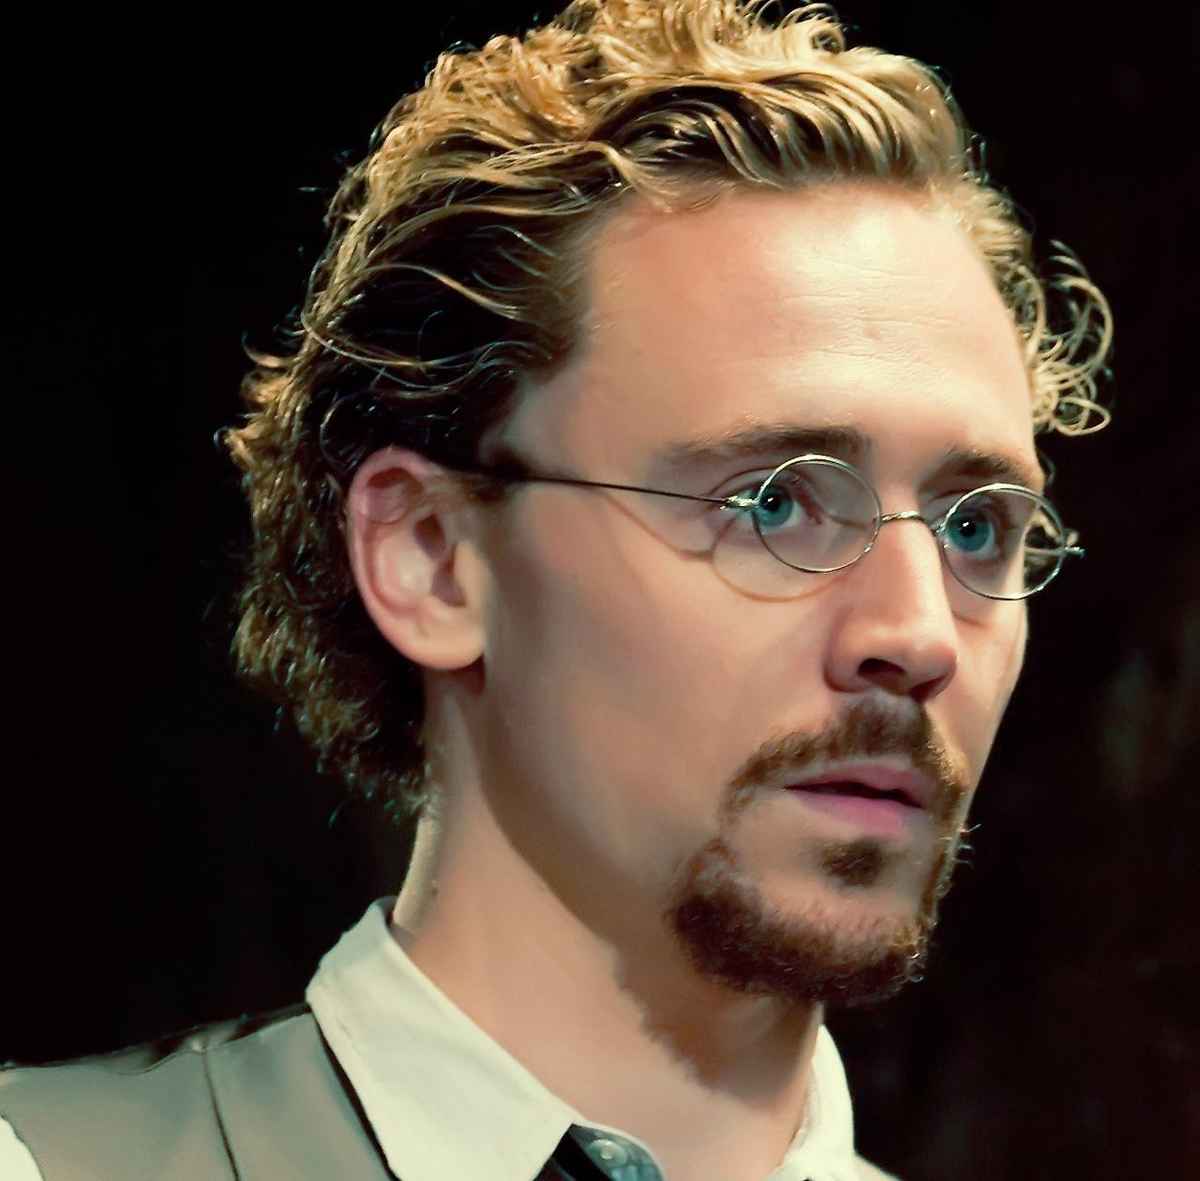 tom hiddleston wears oval wire glasses in ivanov